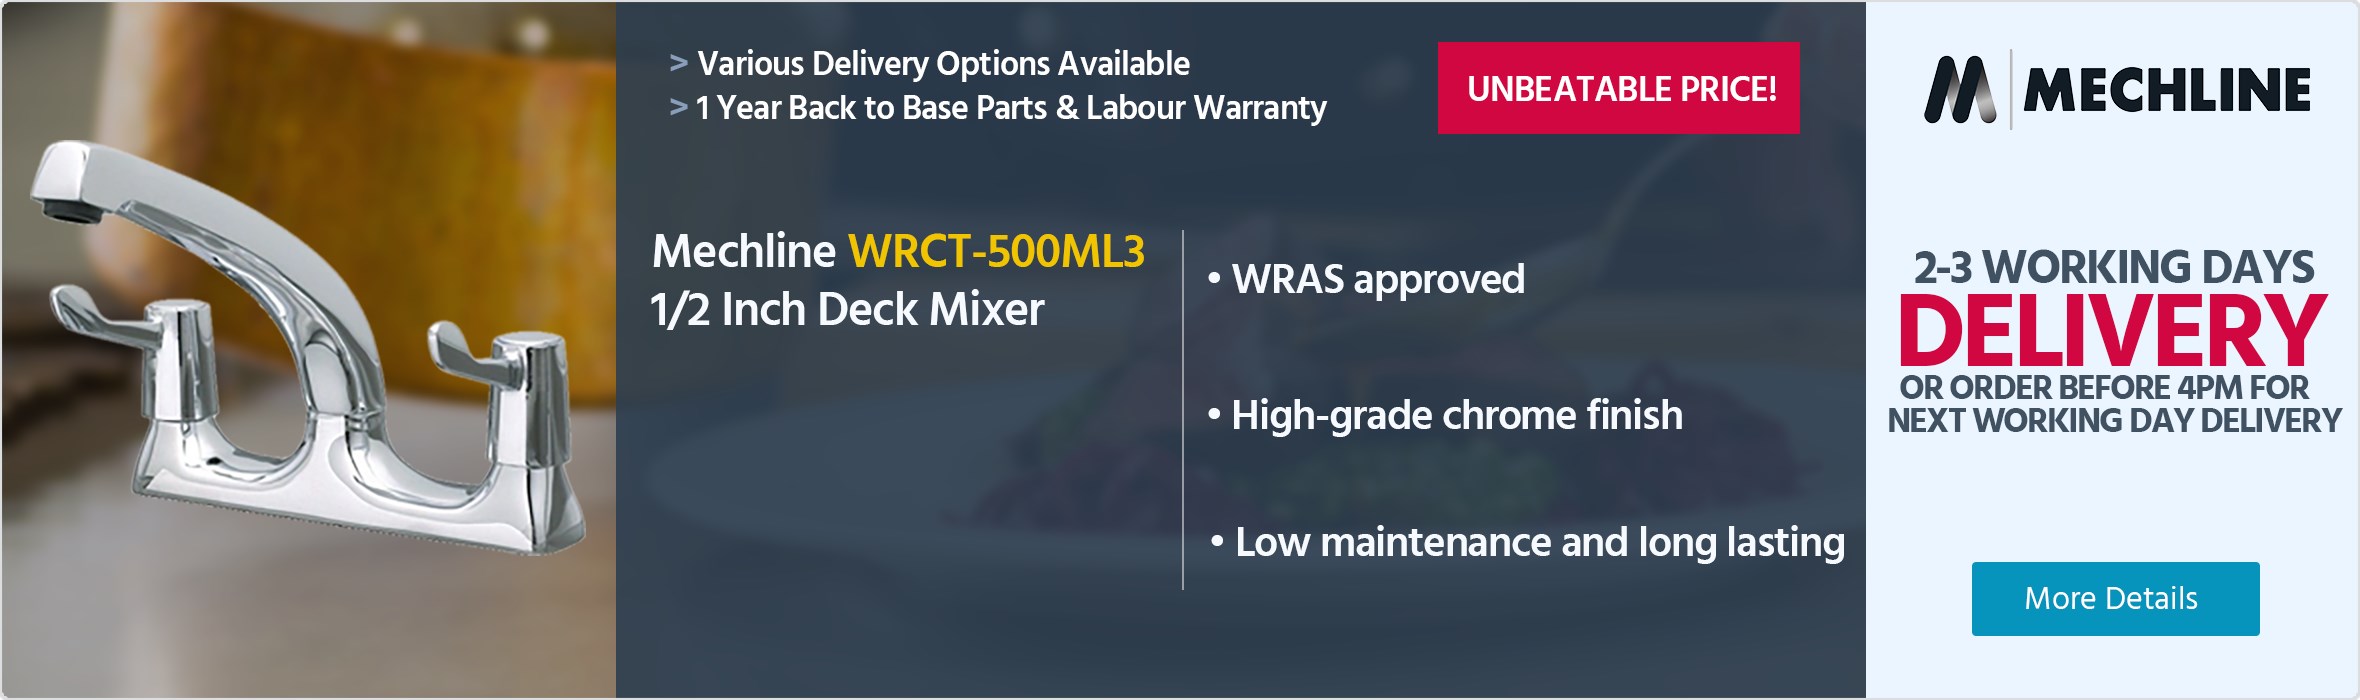 Mechline CaterTap WRCT-500ML3 1/2 Inch Mixer